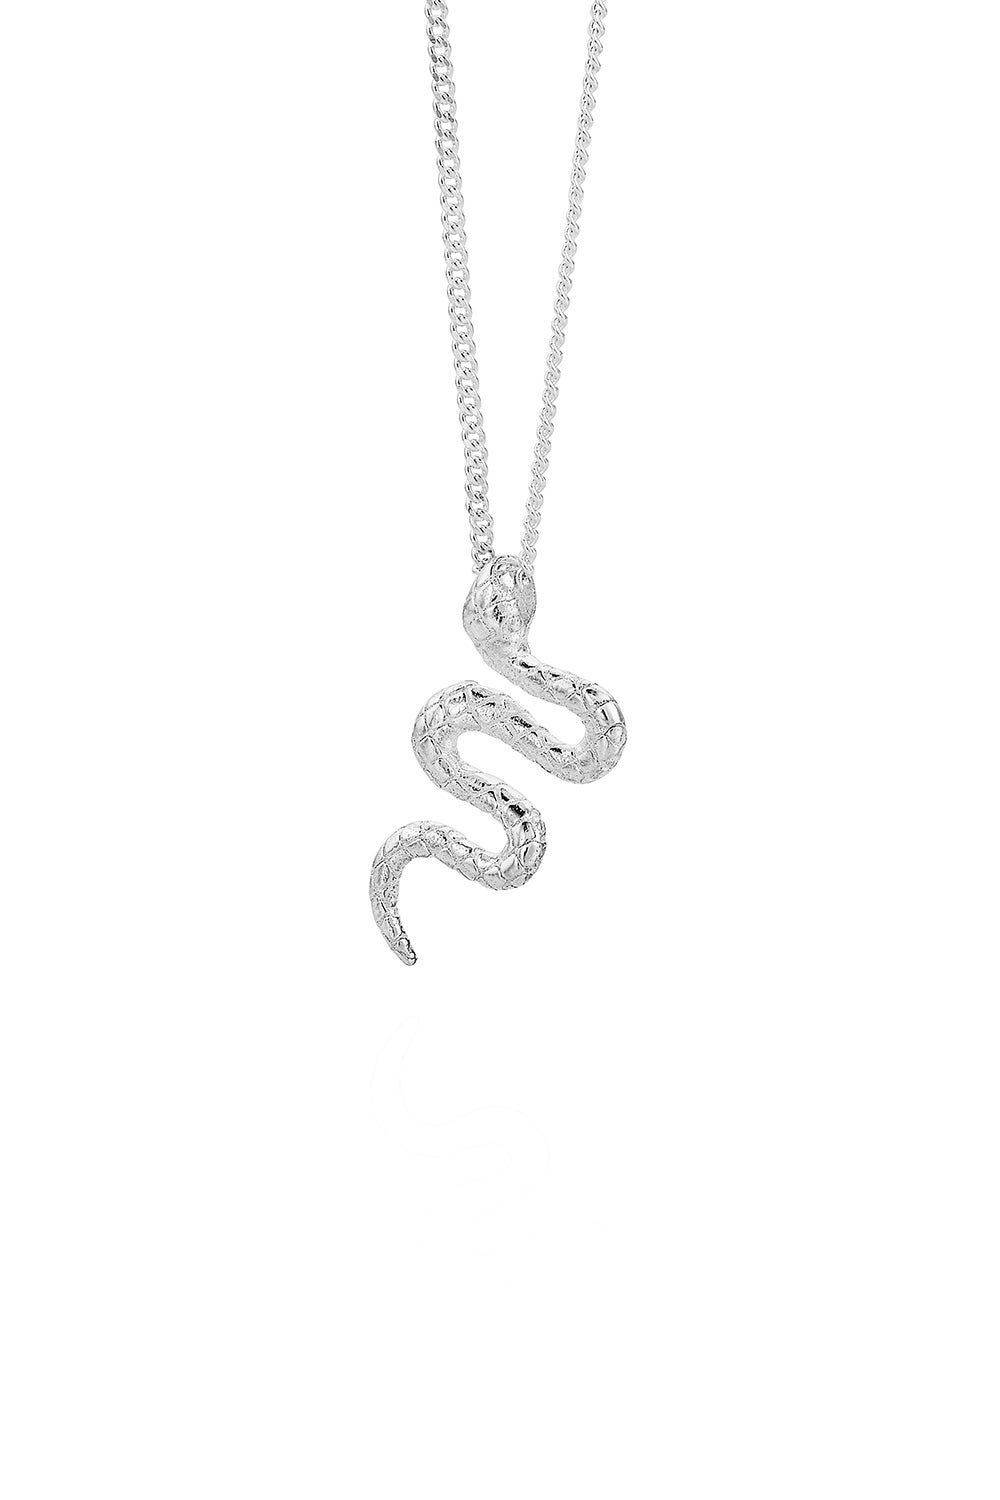 Karen Walker Snake Necklace - Grieve Diamond Jeweller